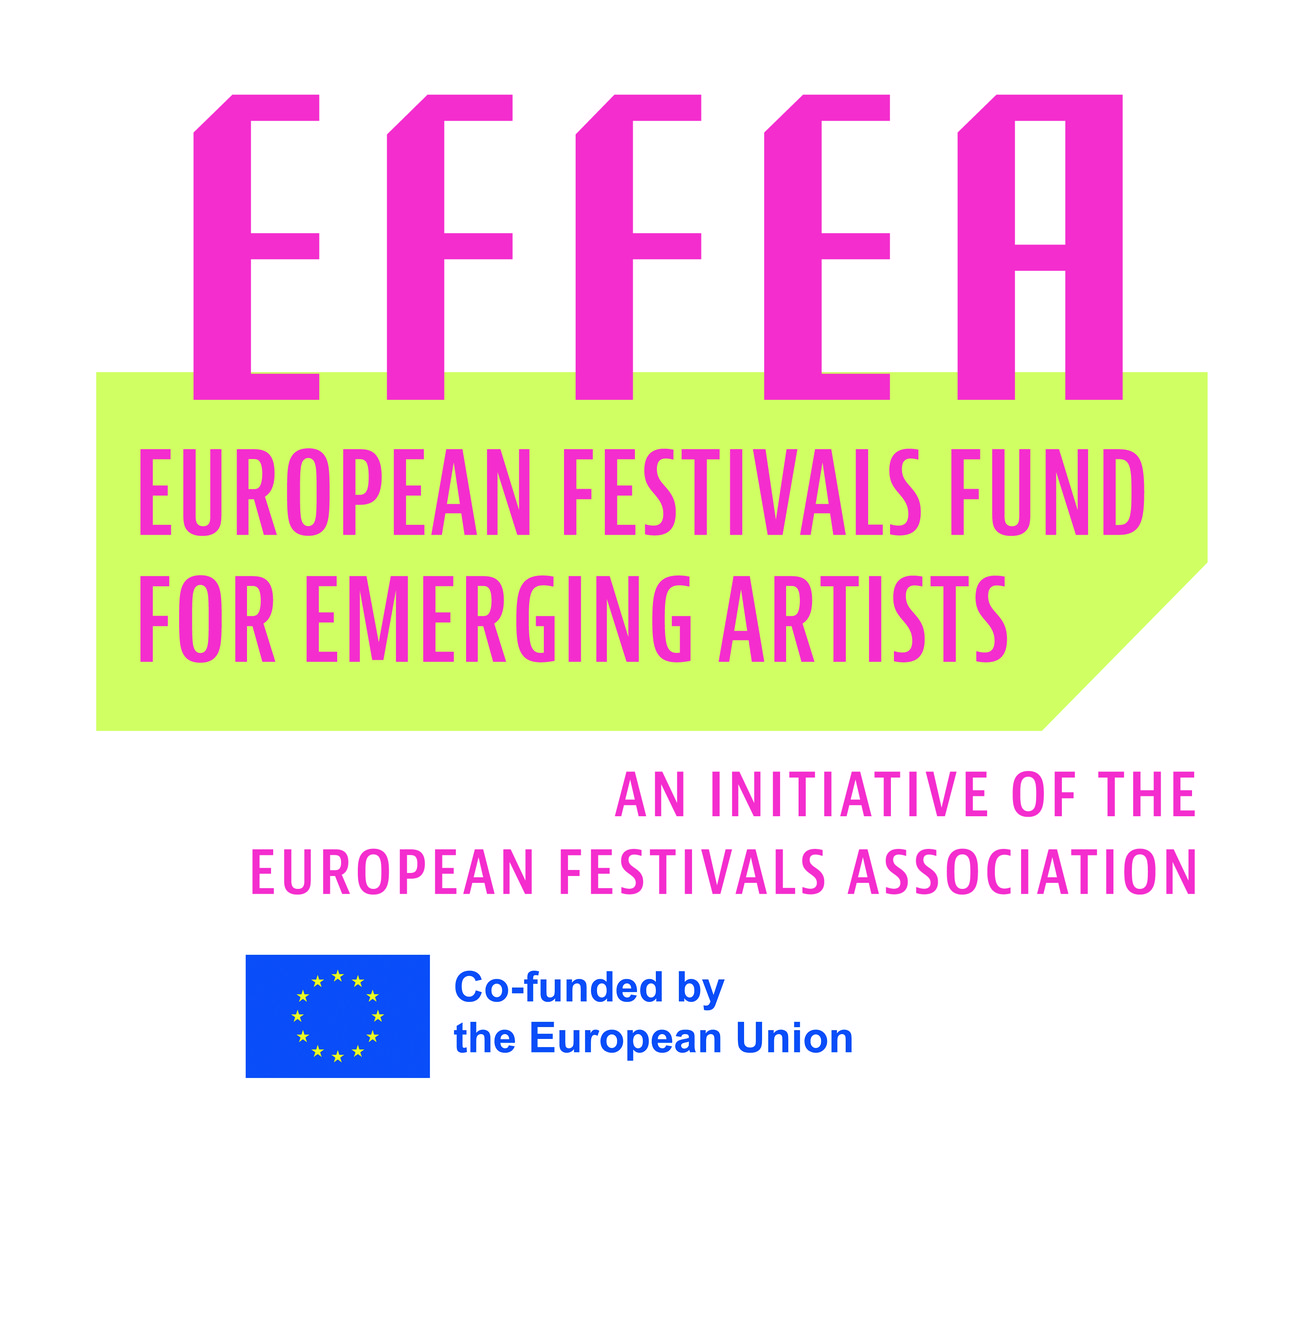 European Festivals Fund for Emerging Artists